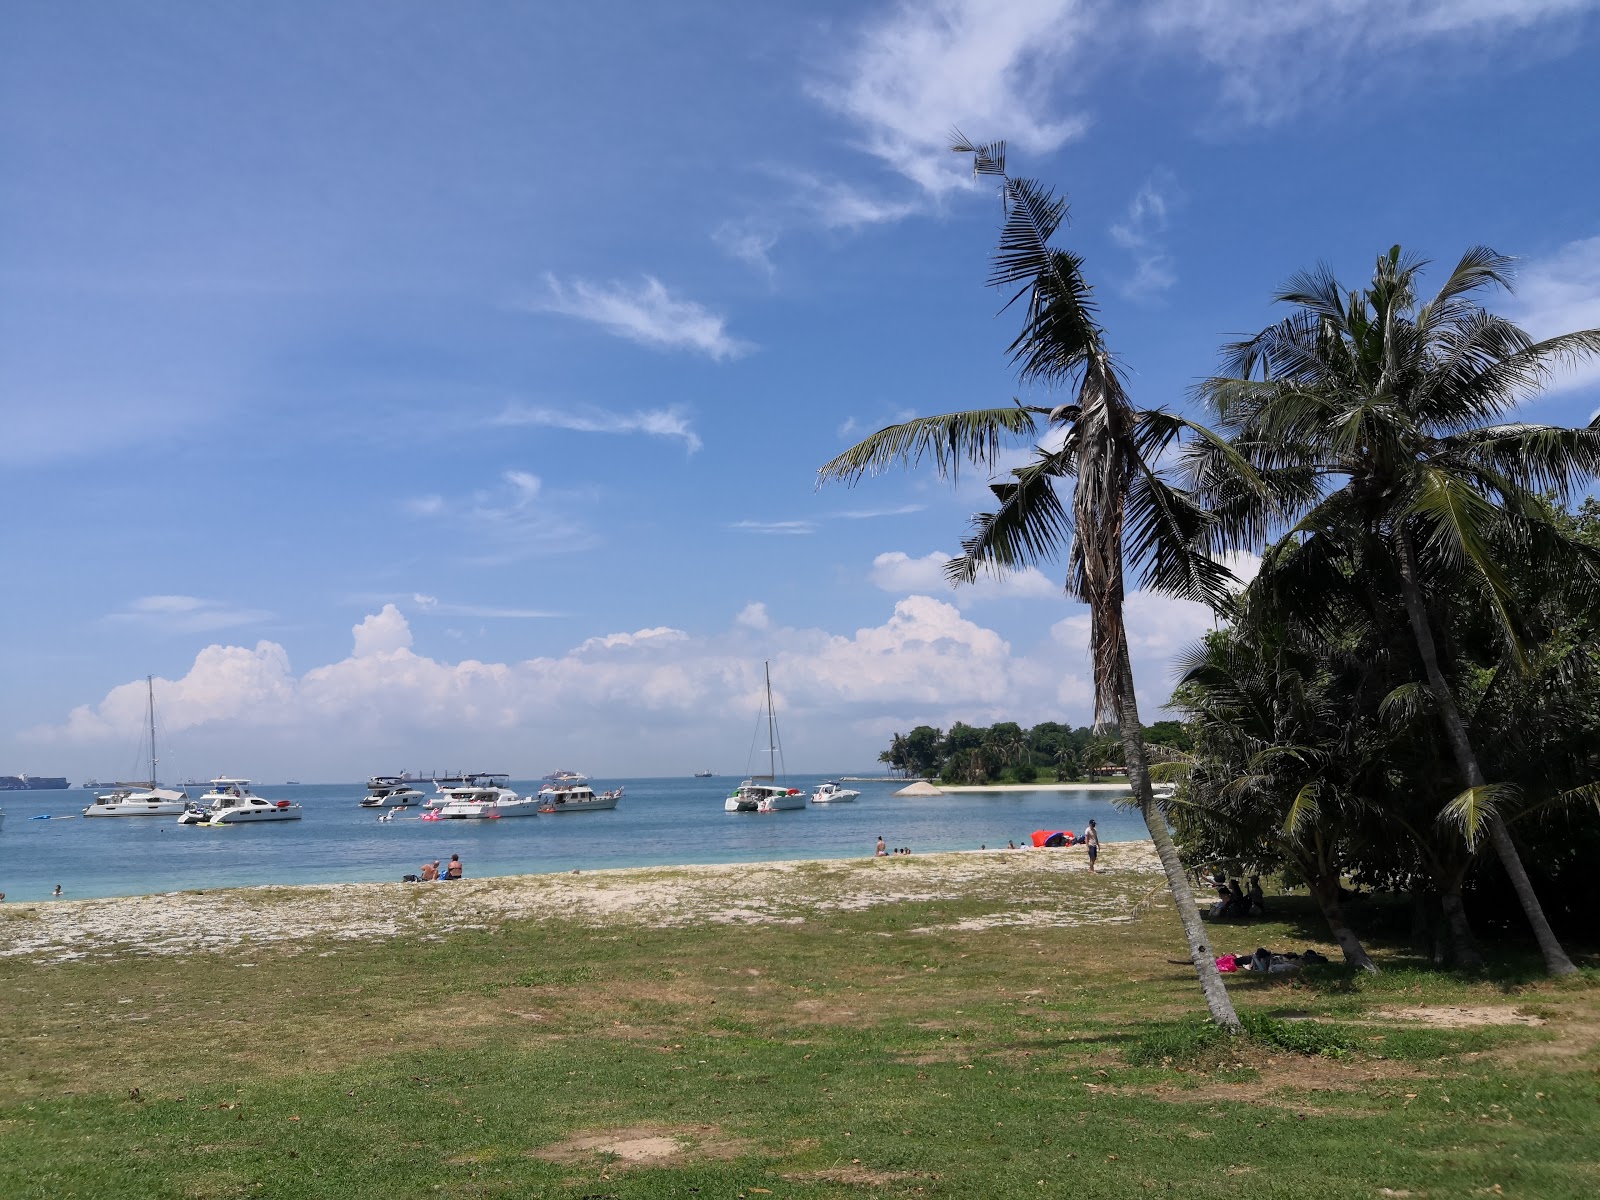 Foto de Lazarus Island Beach - lugar popular entre os apreciadores de relaxamento